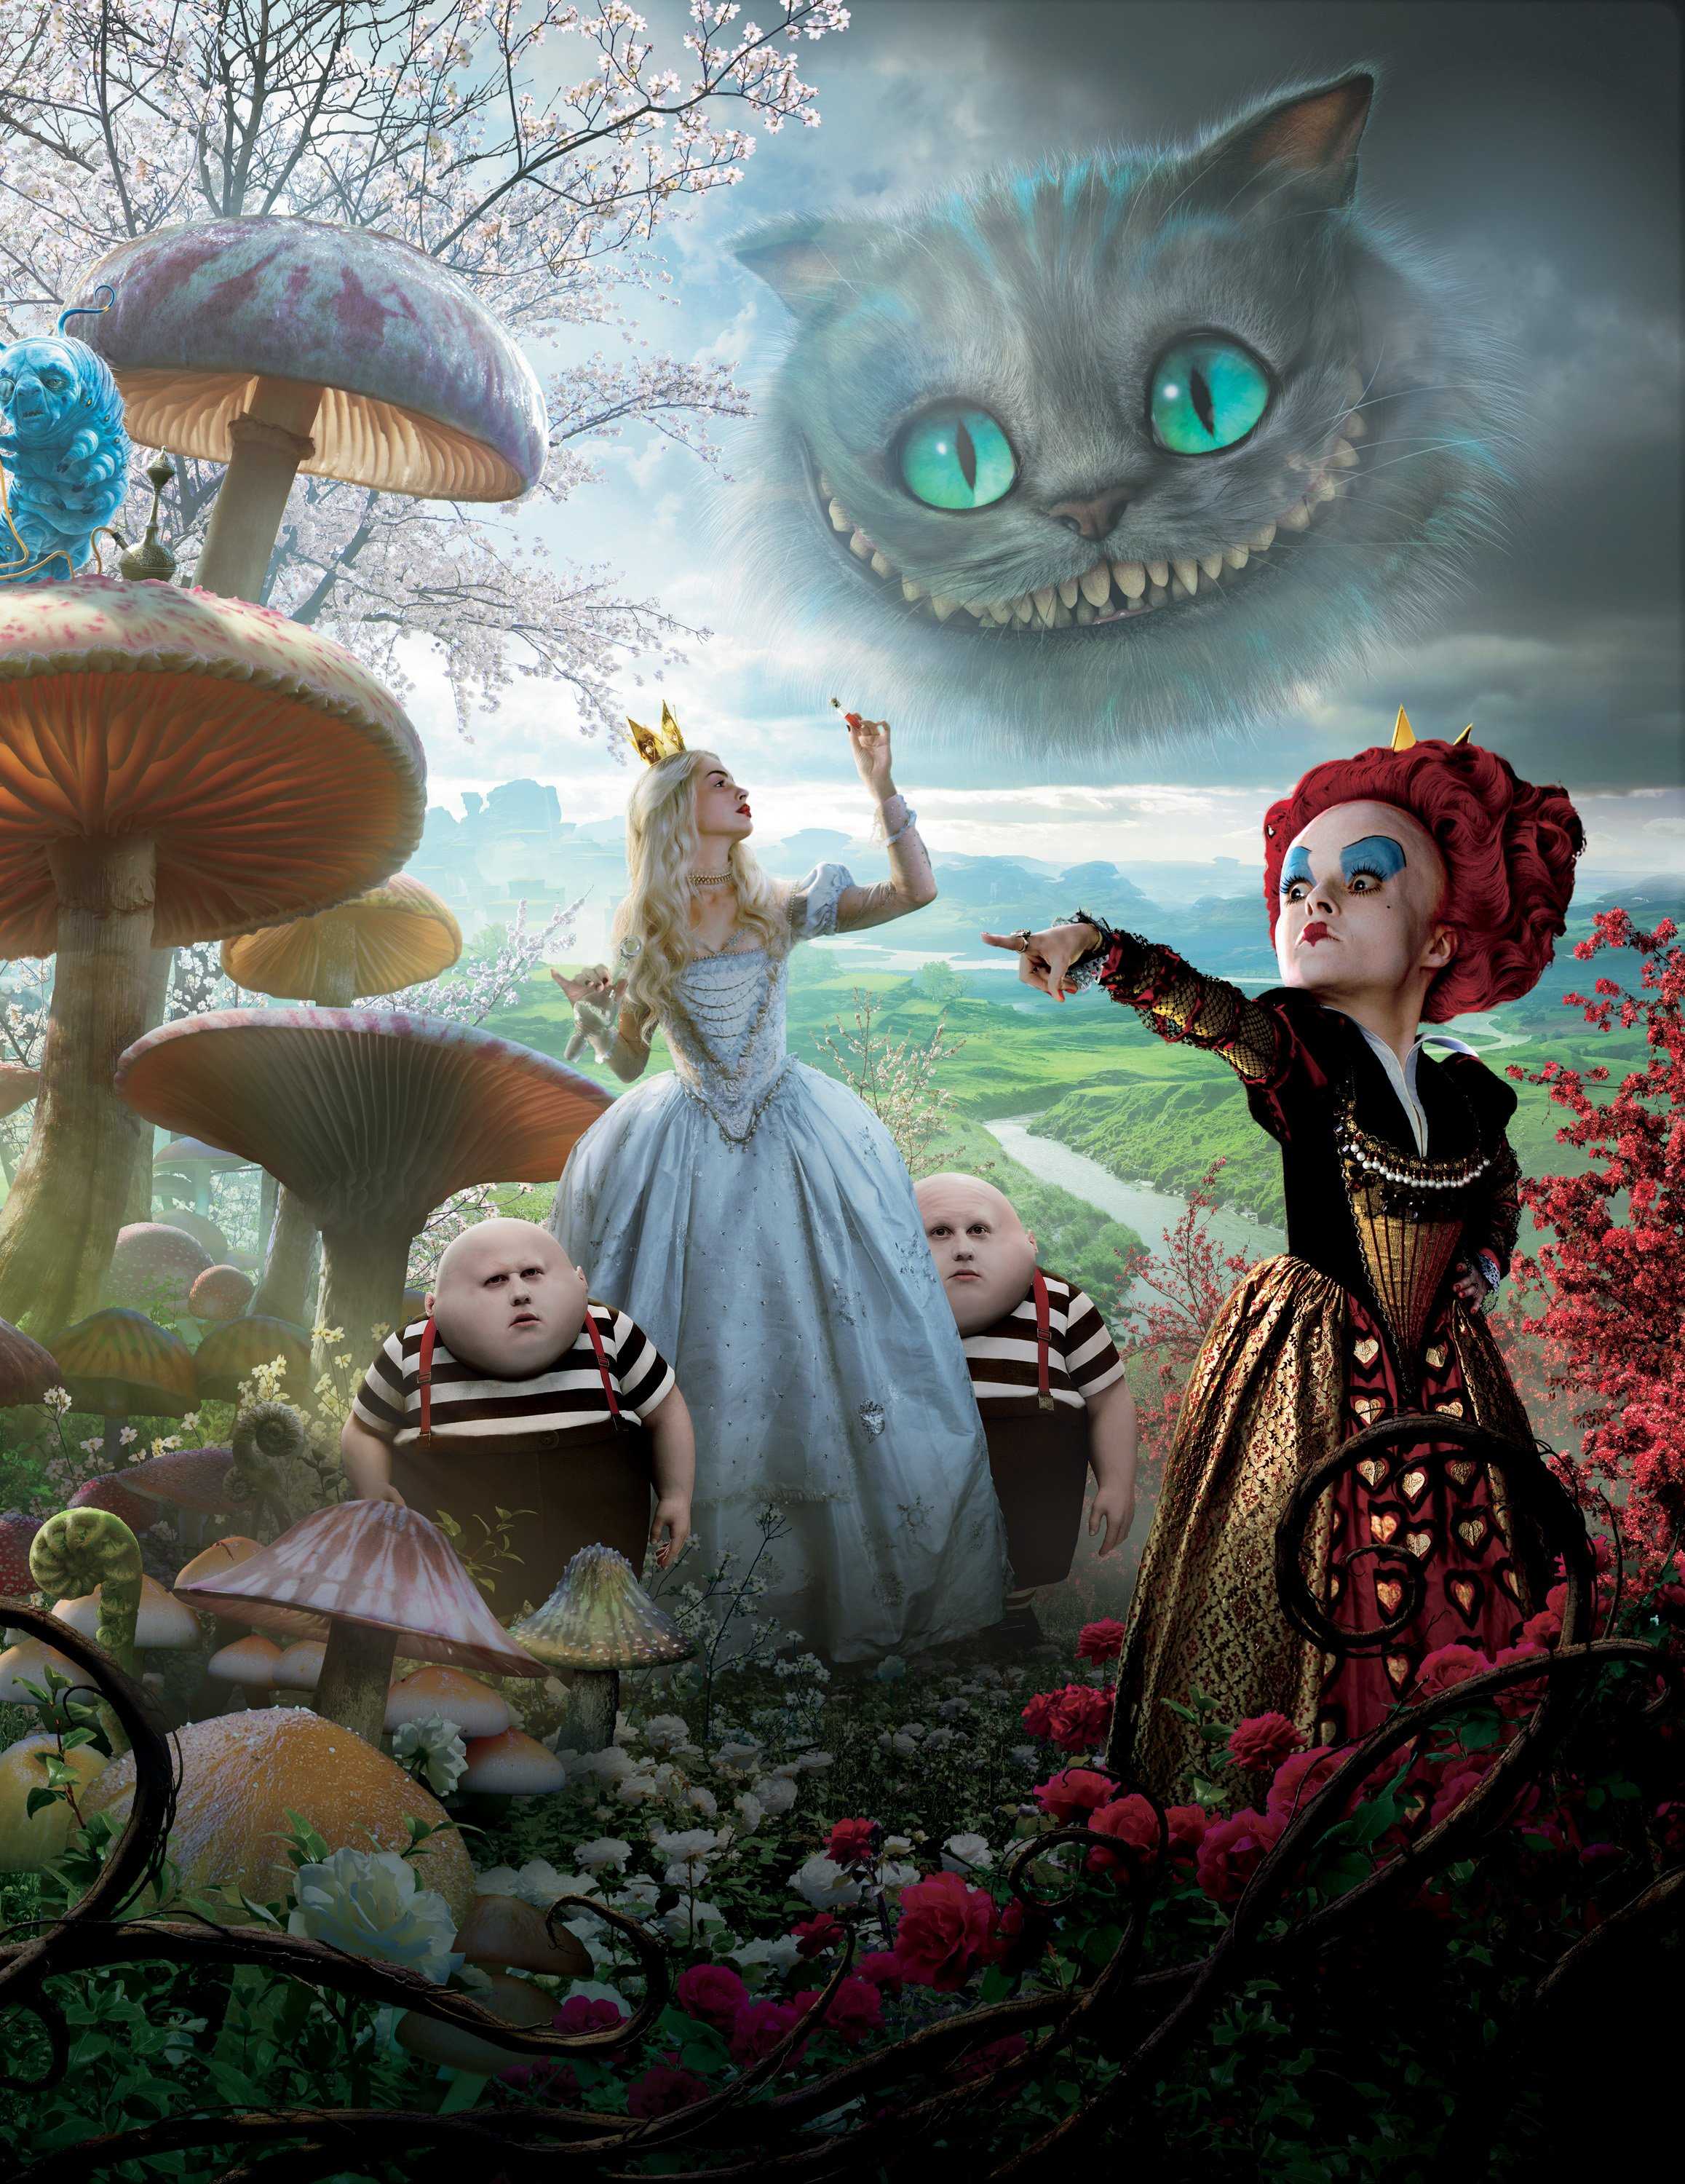 Wonderland Background Images